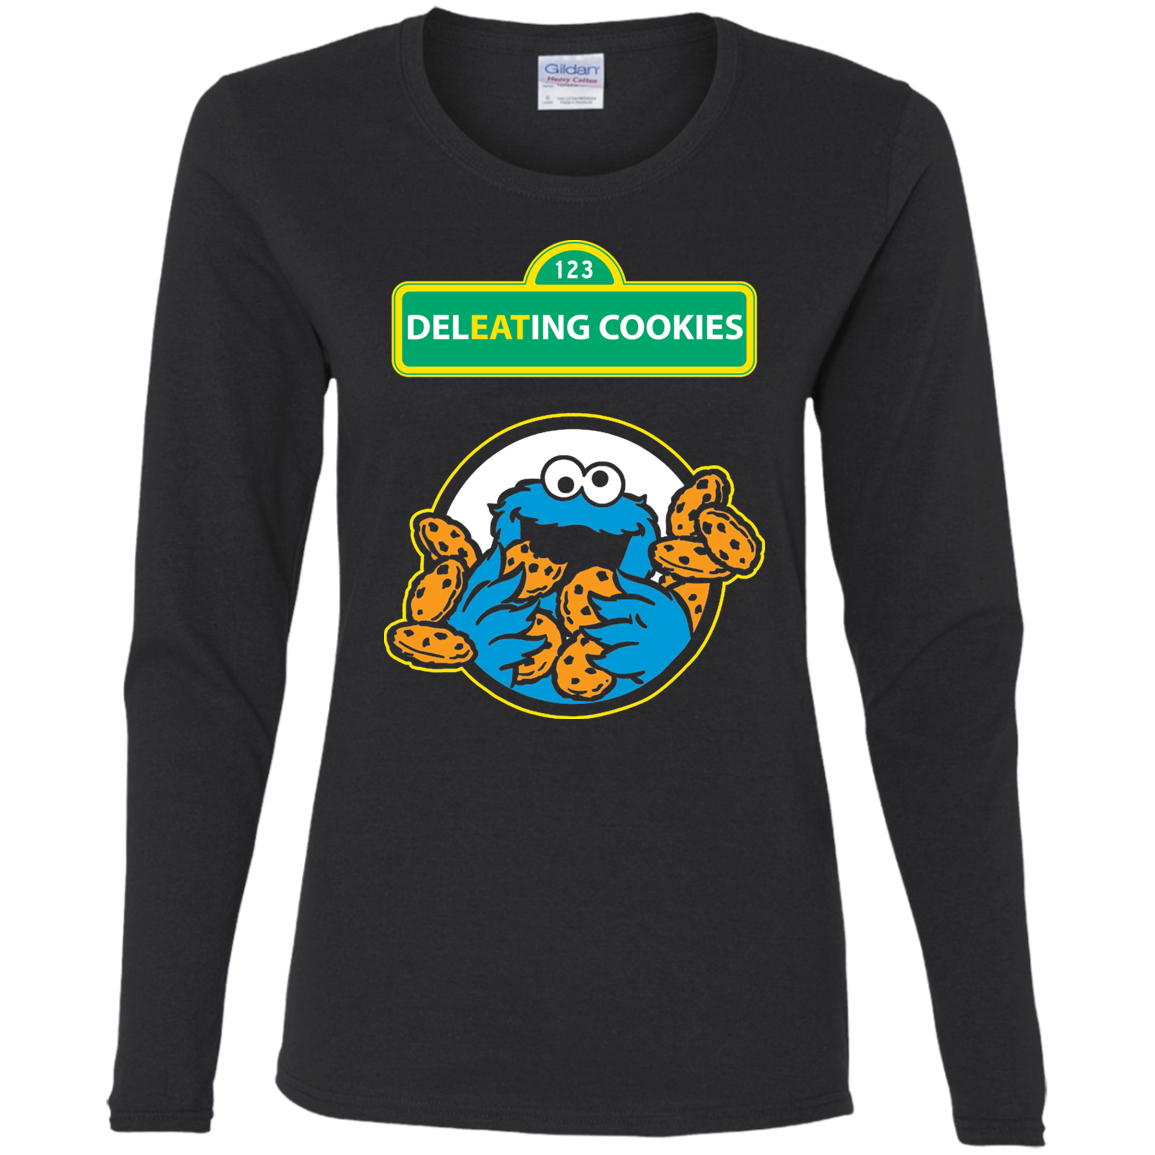 ArtichokeUSA Custom Design #55. DelEATing Cookes. IT humor. Cookie Monster Parody. Ladies' 100% Cotton Long Sleeve T-Shirt